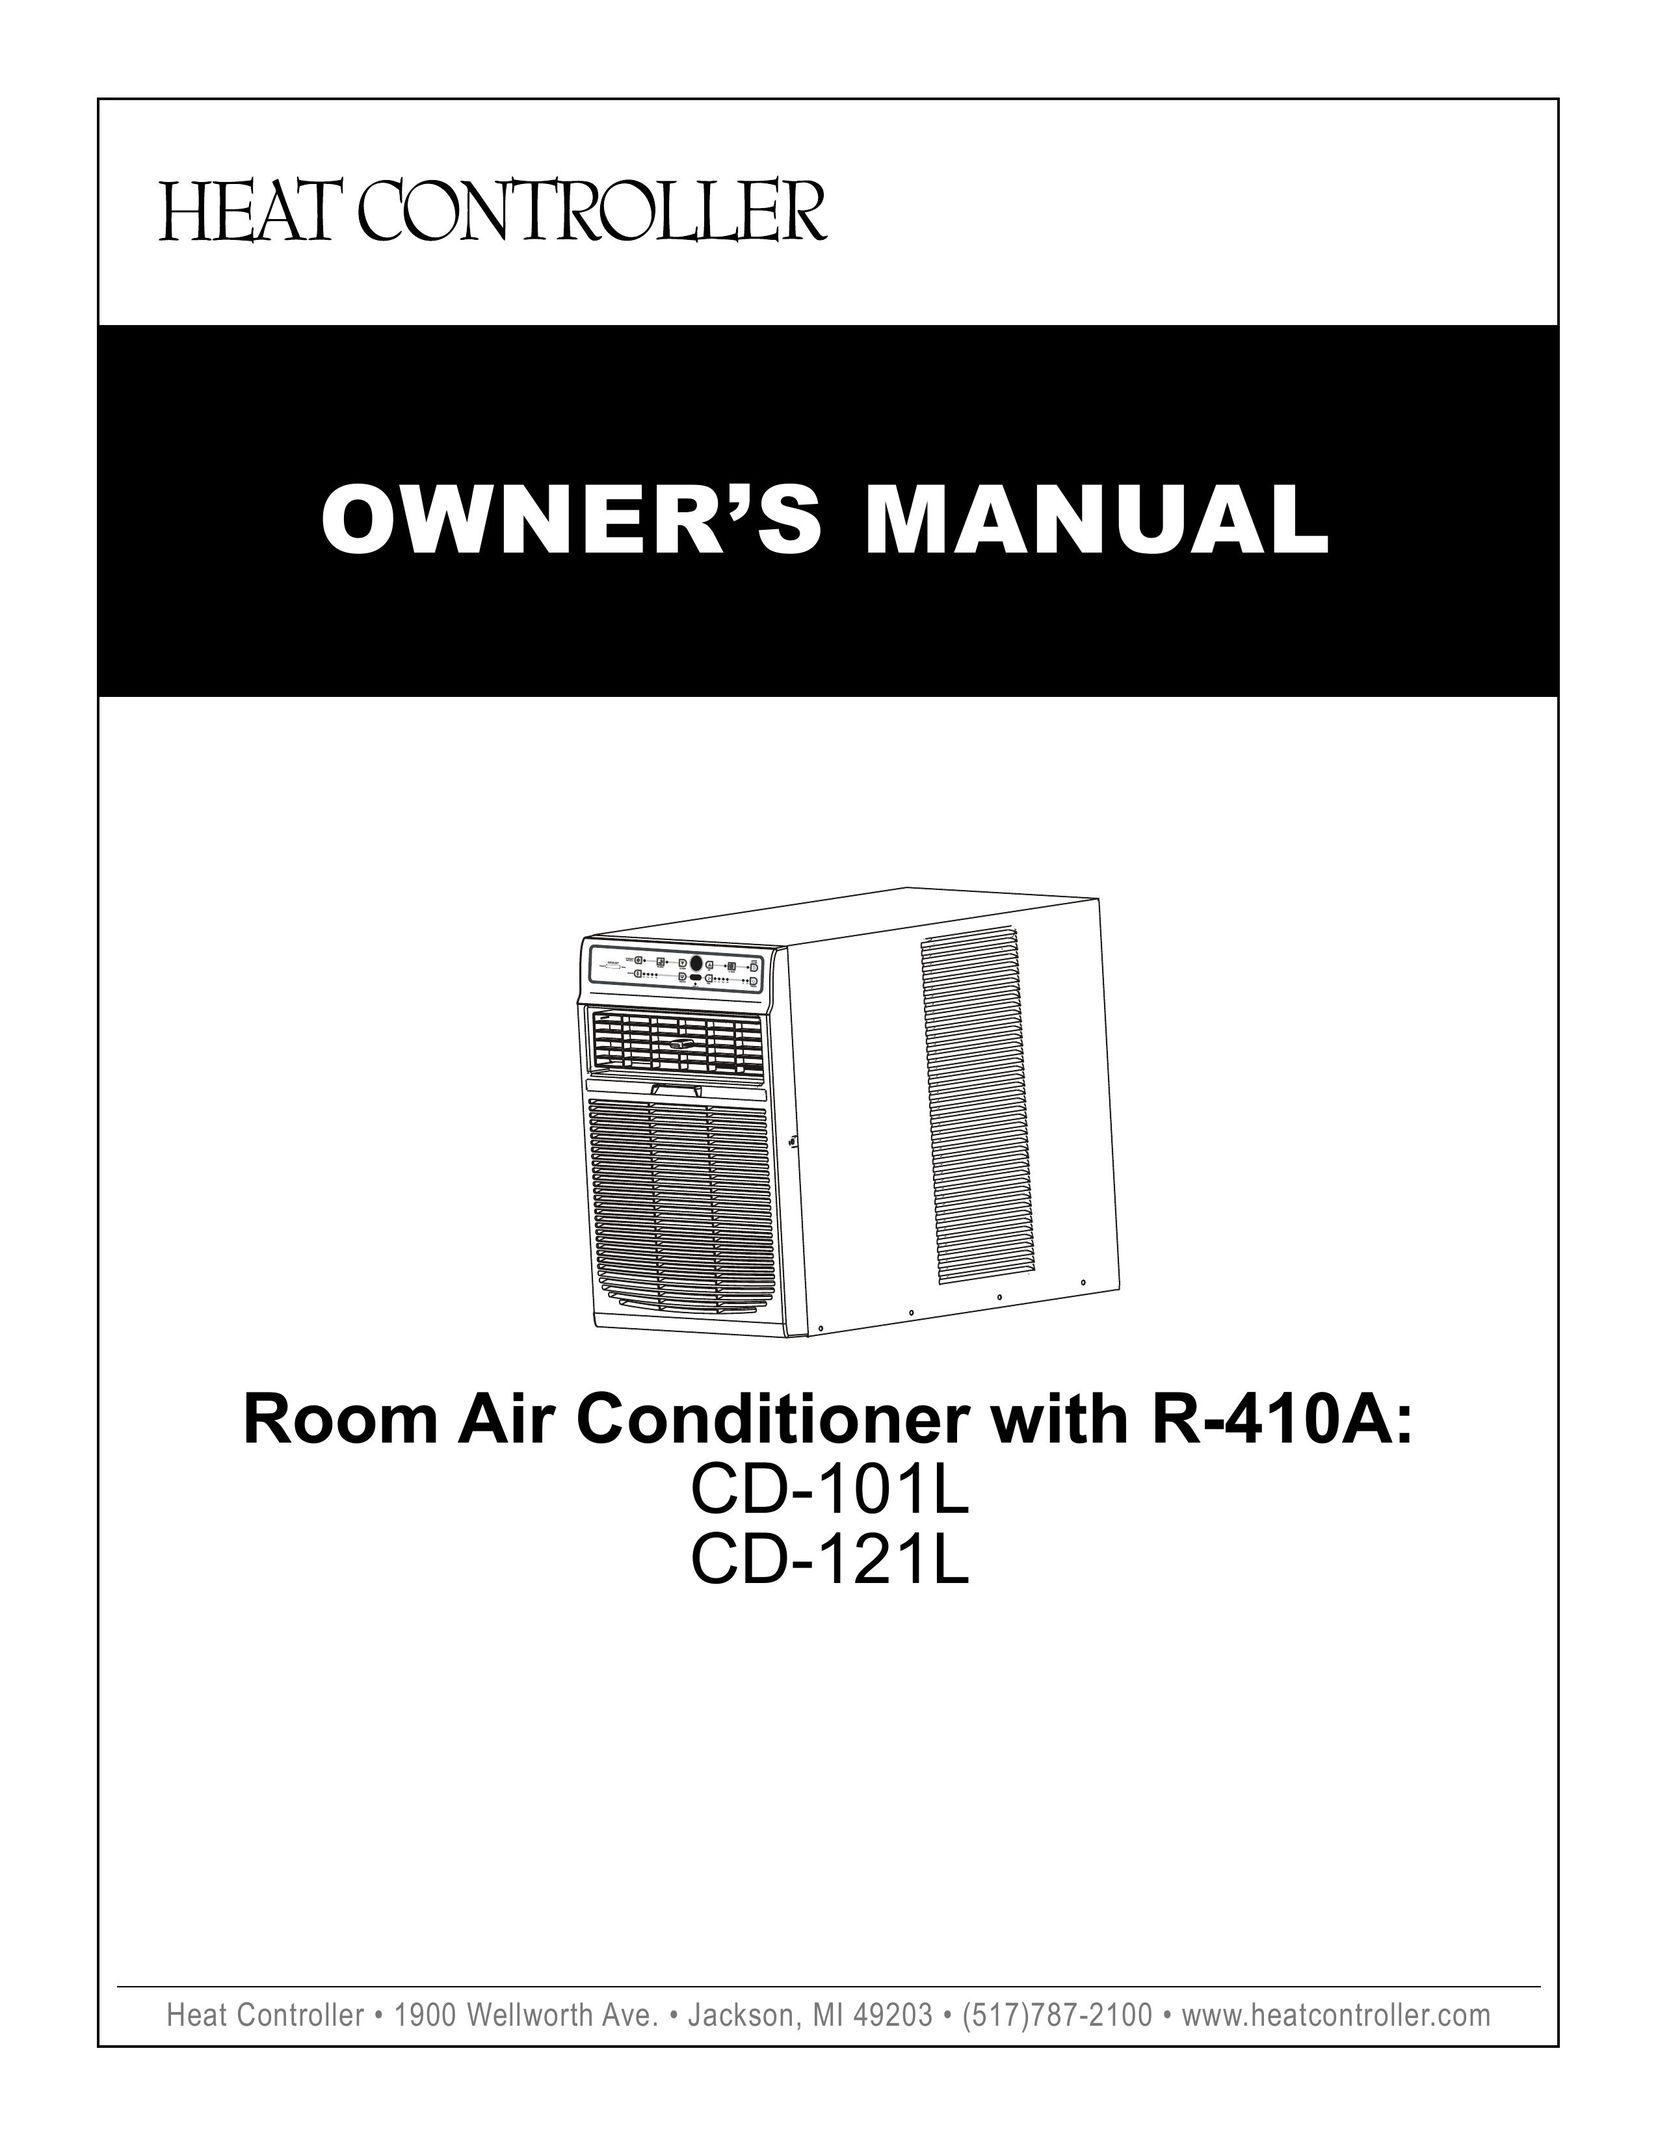 Heat Controller CD-121L Air Conditioner User Manual